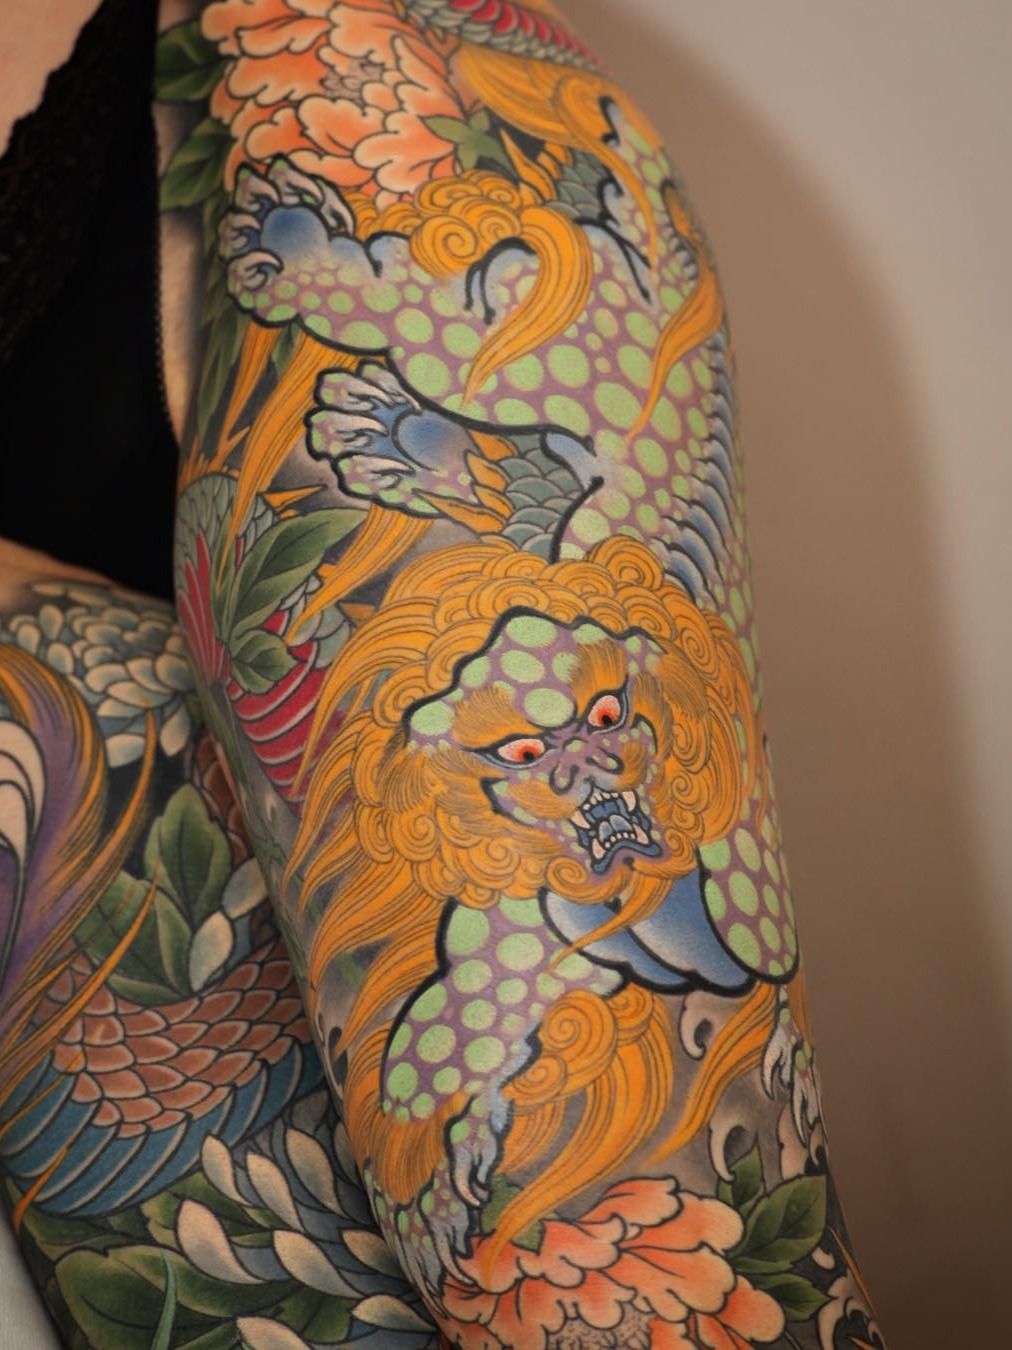 Gallery - Versatile tattoo artists | G2 Tattoo Shop Okinawa